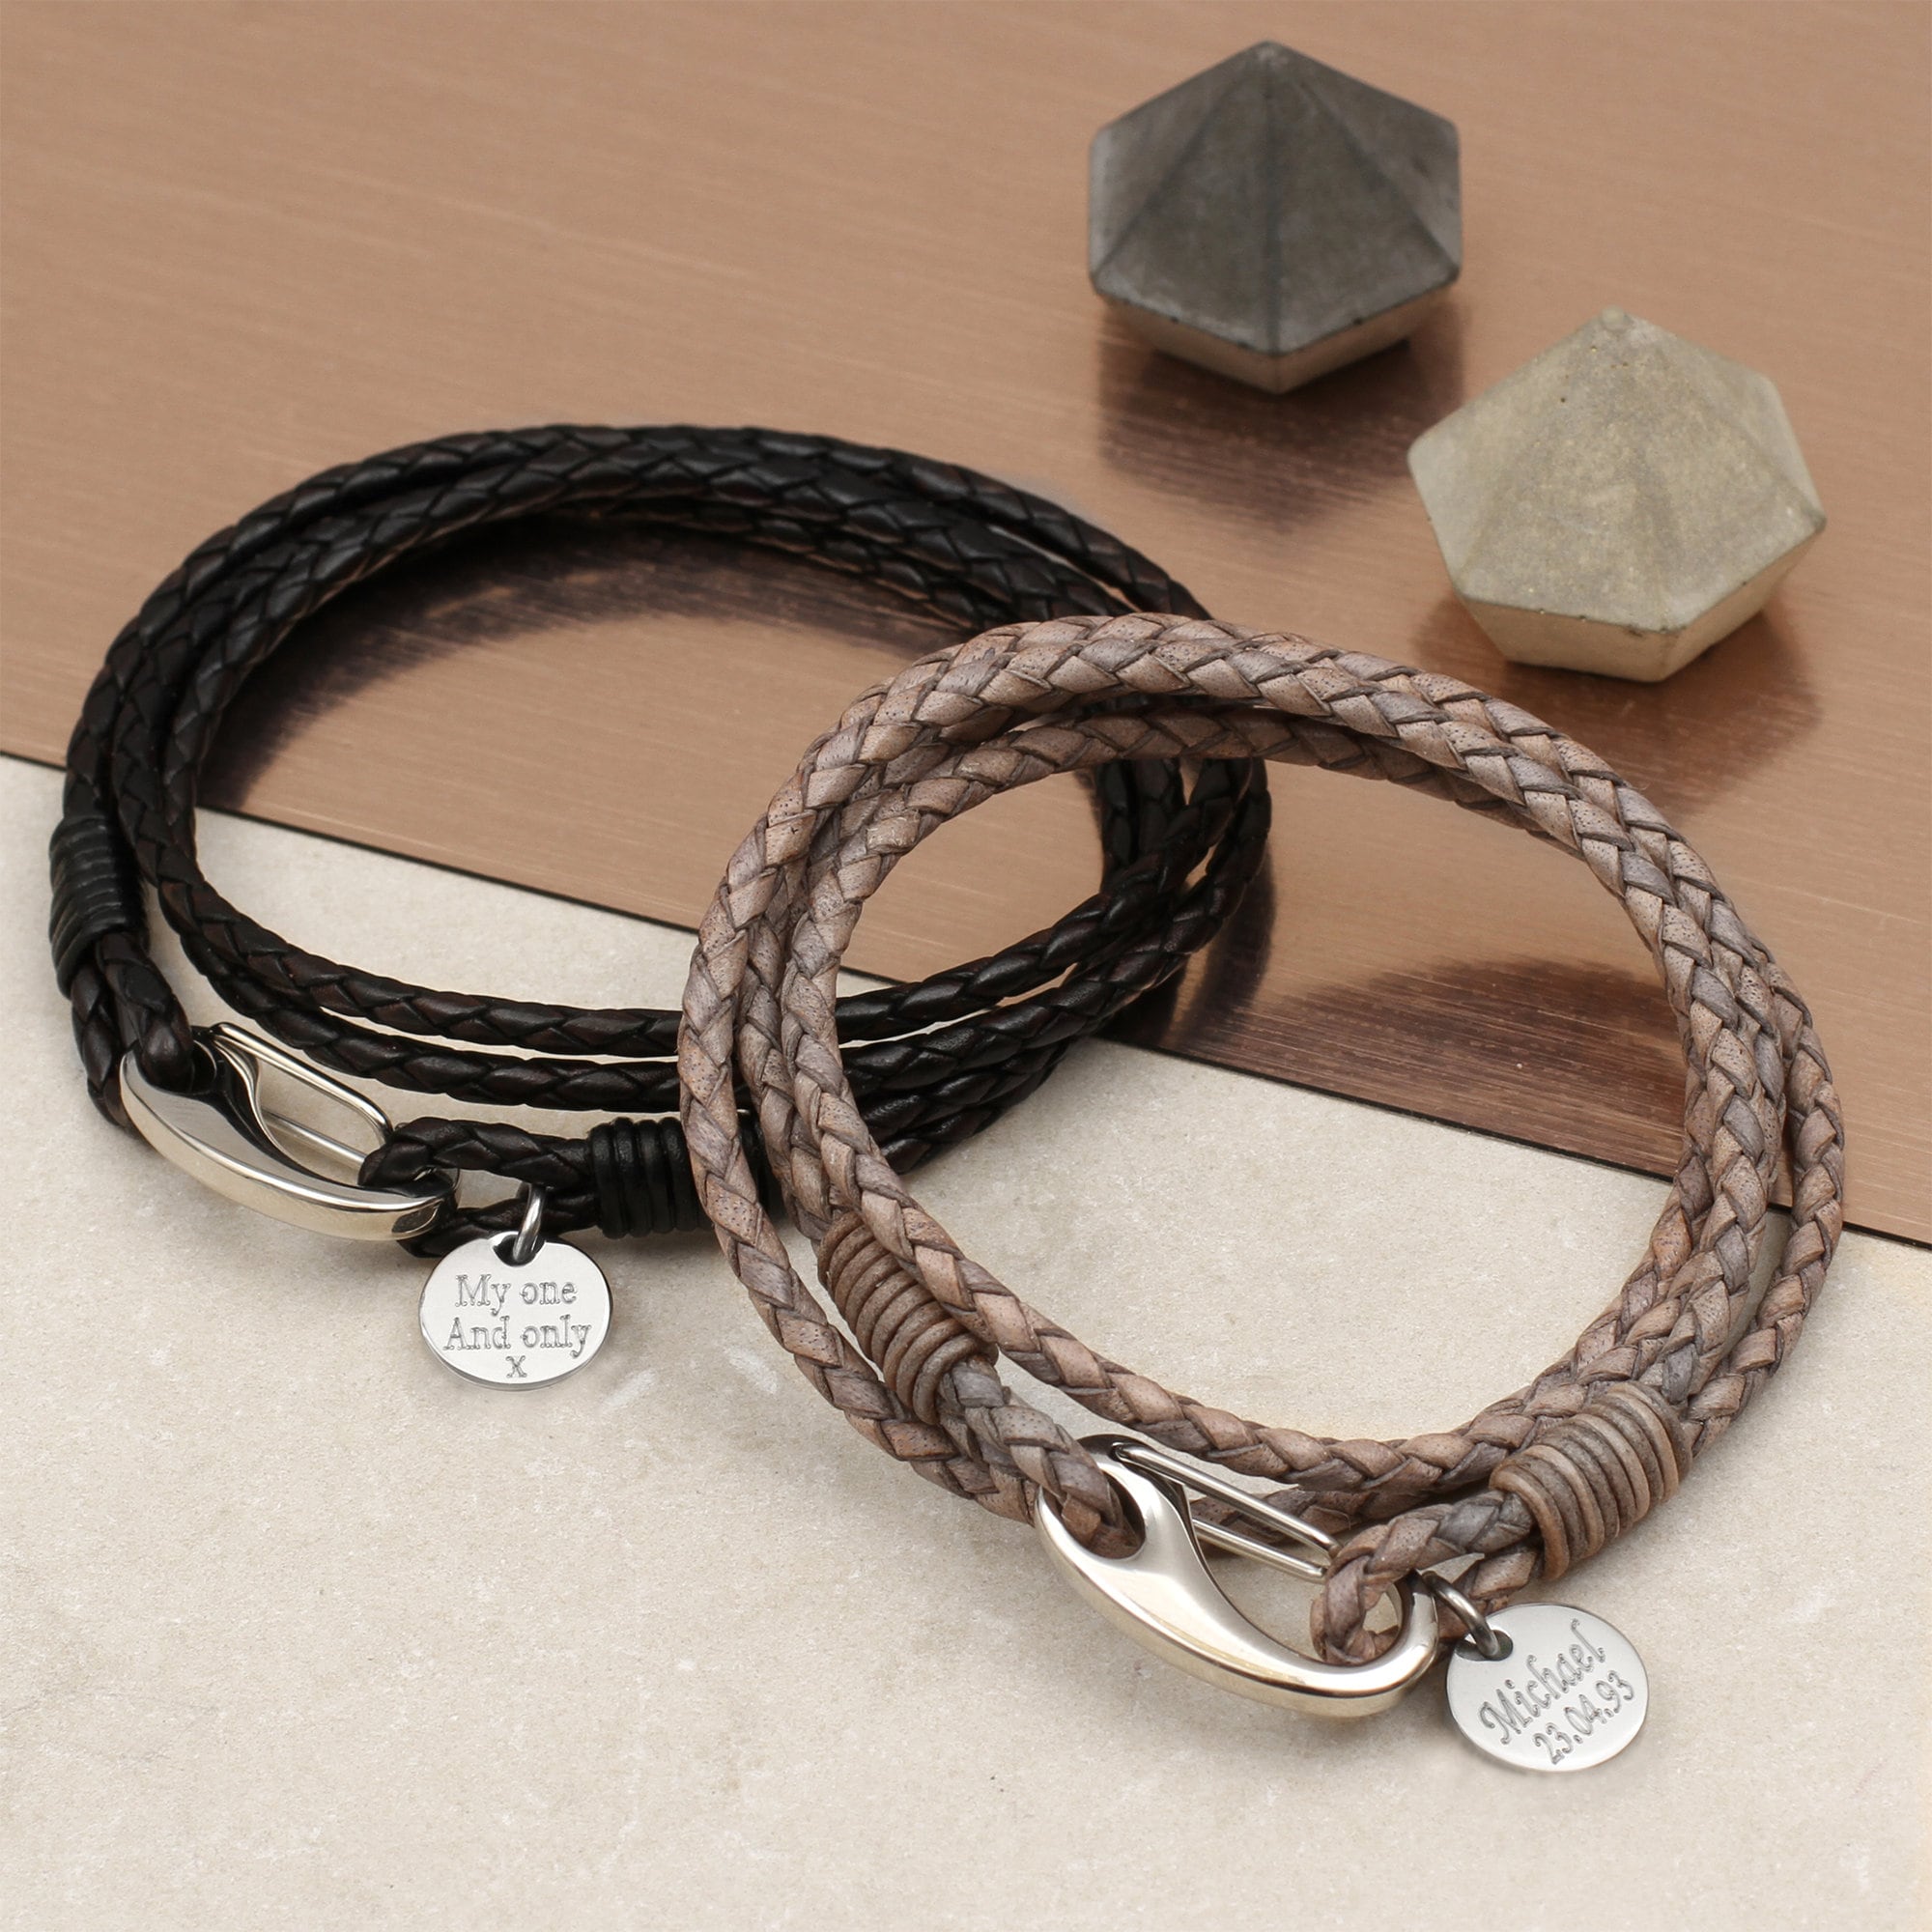 Kieselstein-Cord 925 Silver Star Moon Dog Gator Leather Charm Bracelet